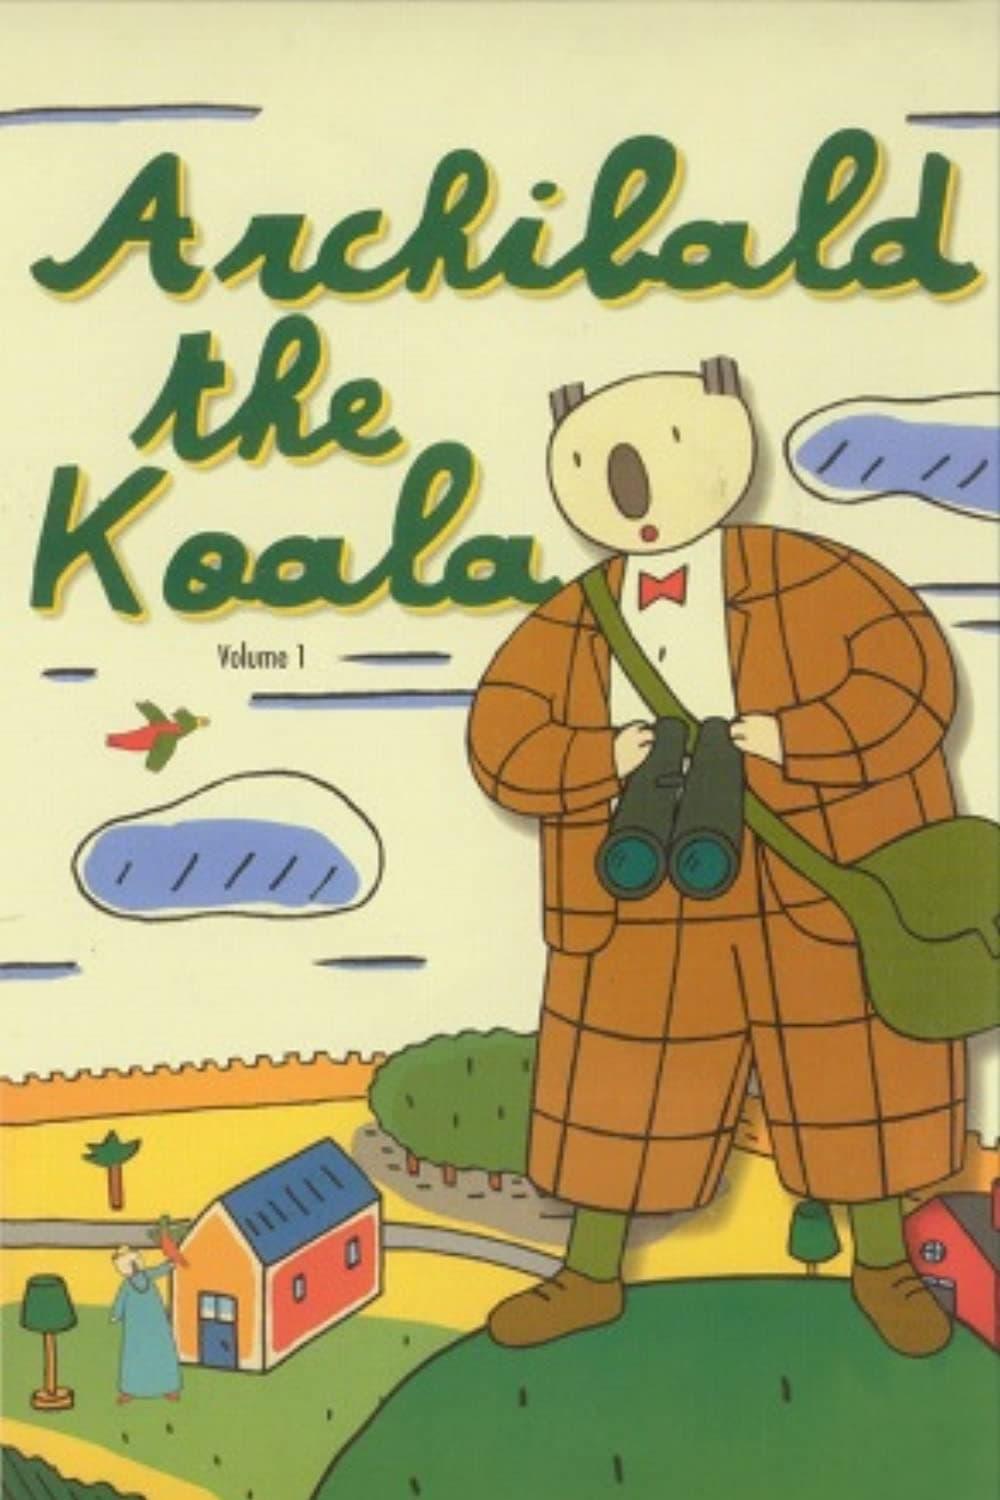 Archibald the Koala poster